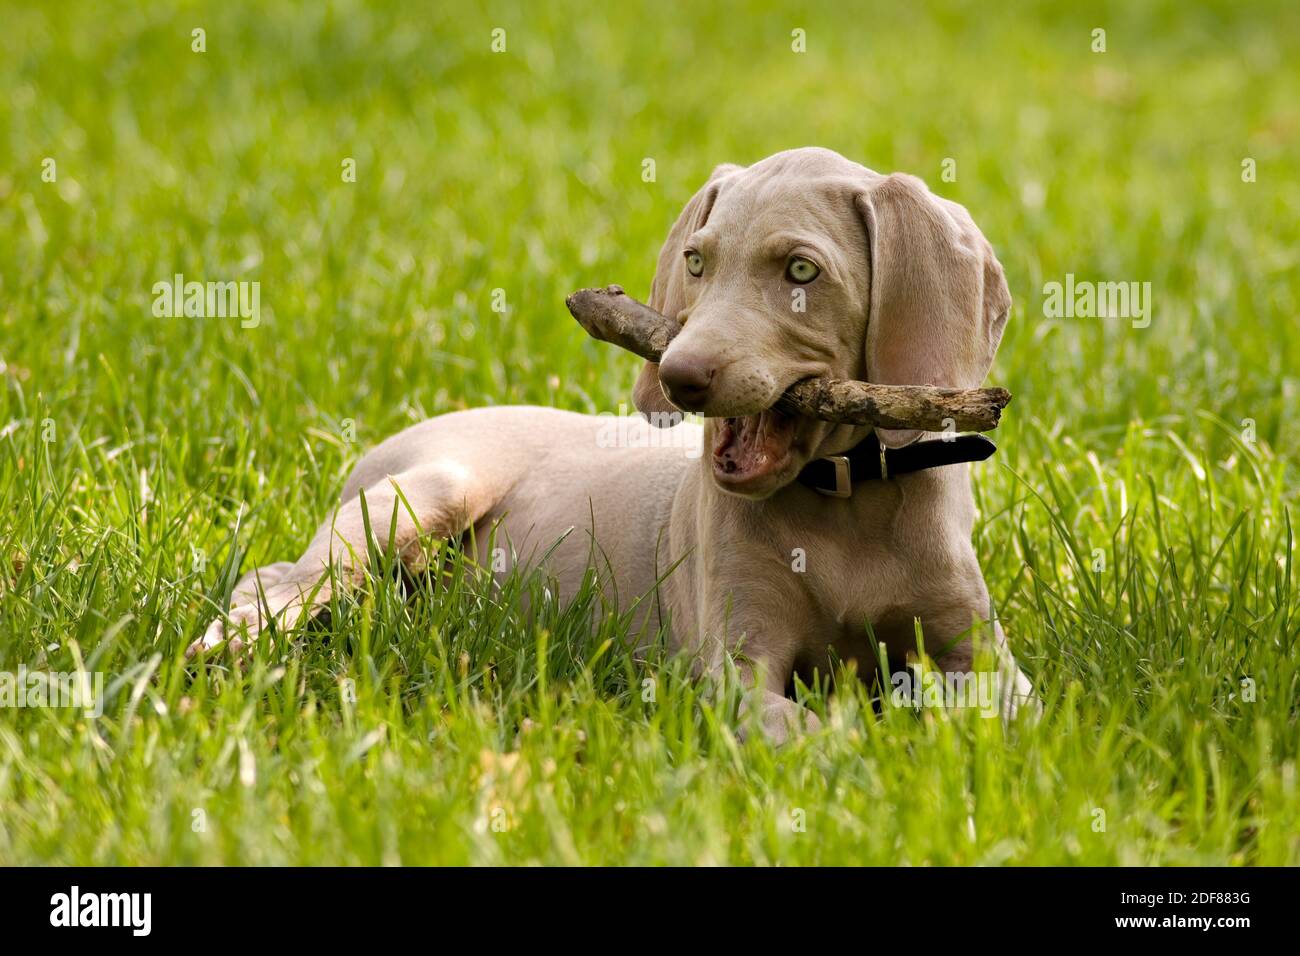 Lovely purebred Weimaraner puppy biting wooden stick on green lawn. Portrait of weimar dog pet playing with wooden stick on green grass background. Co Stock Photo